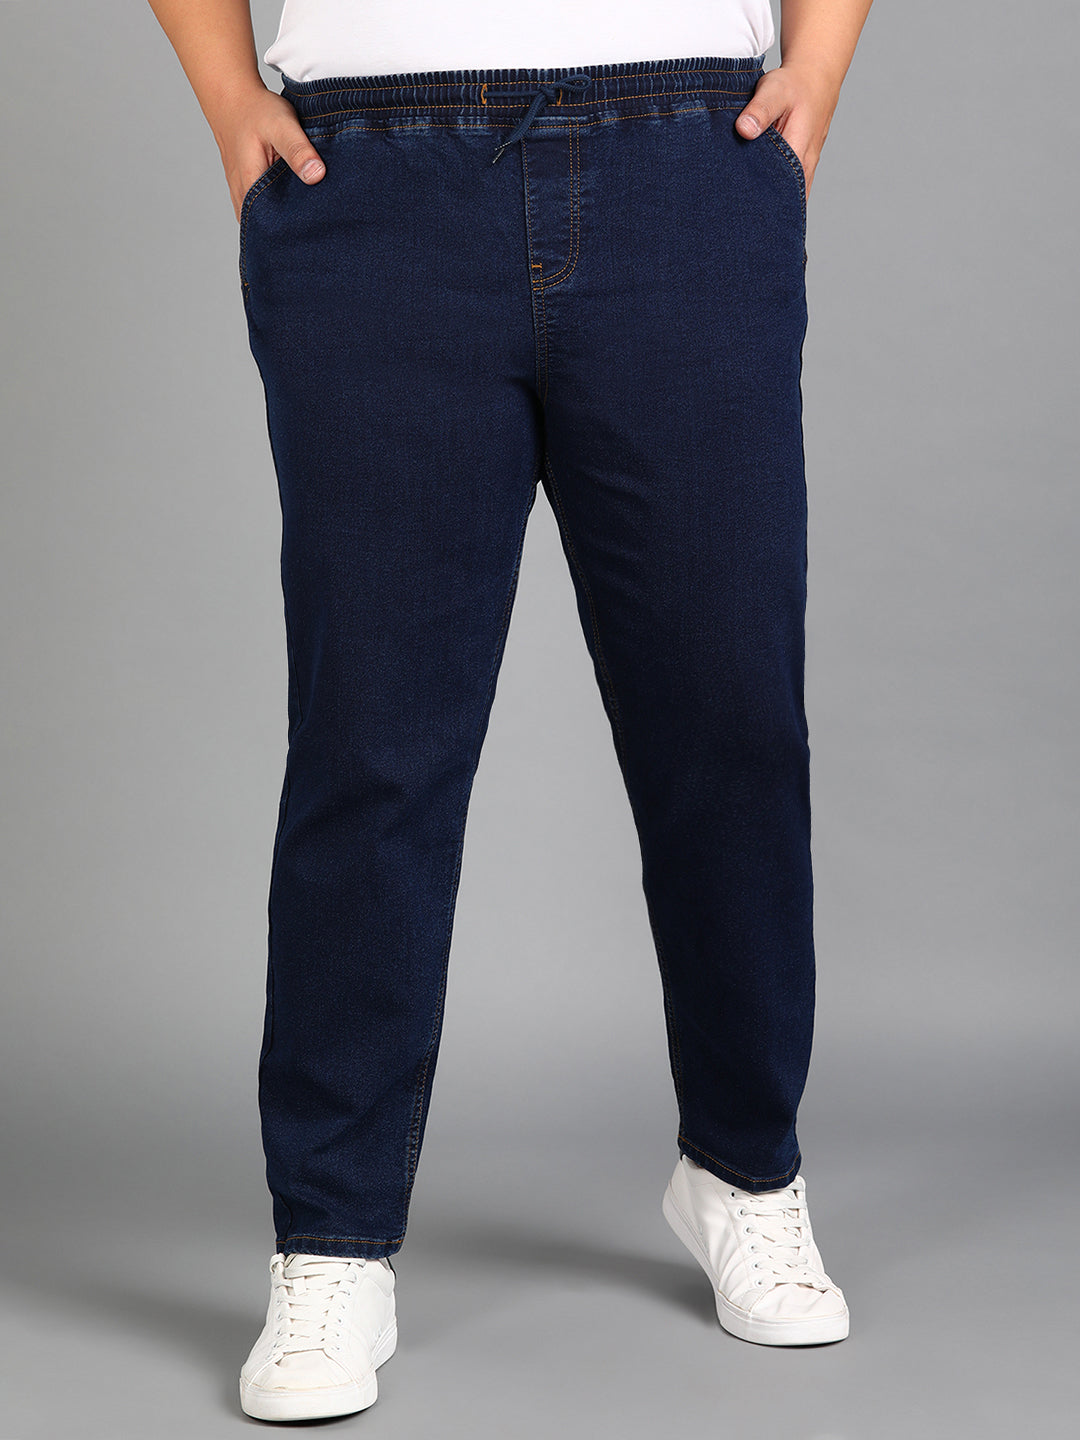 Urbano Plus Men's Dark Blue Regular Fit Washed Jogger Jeans Stretchable